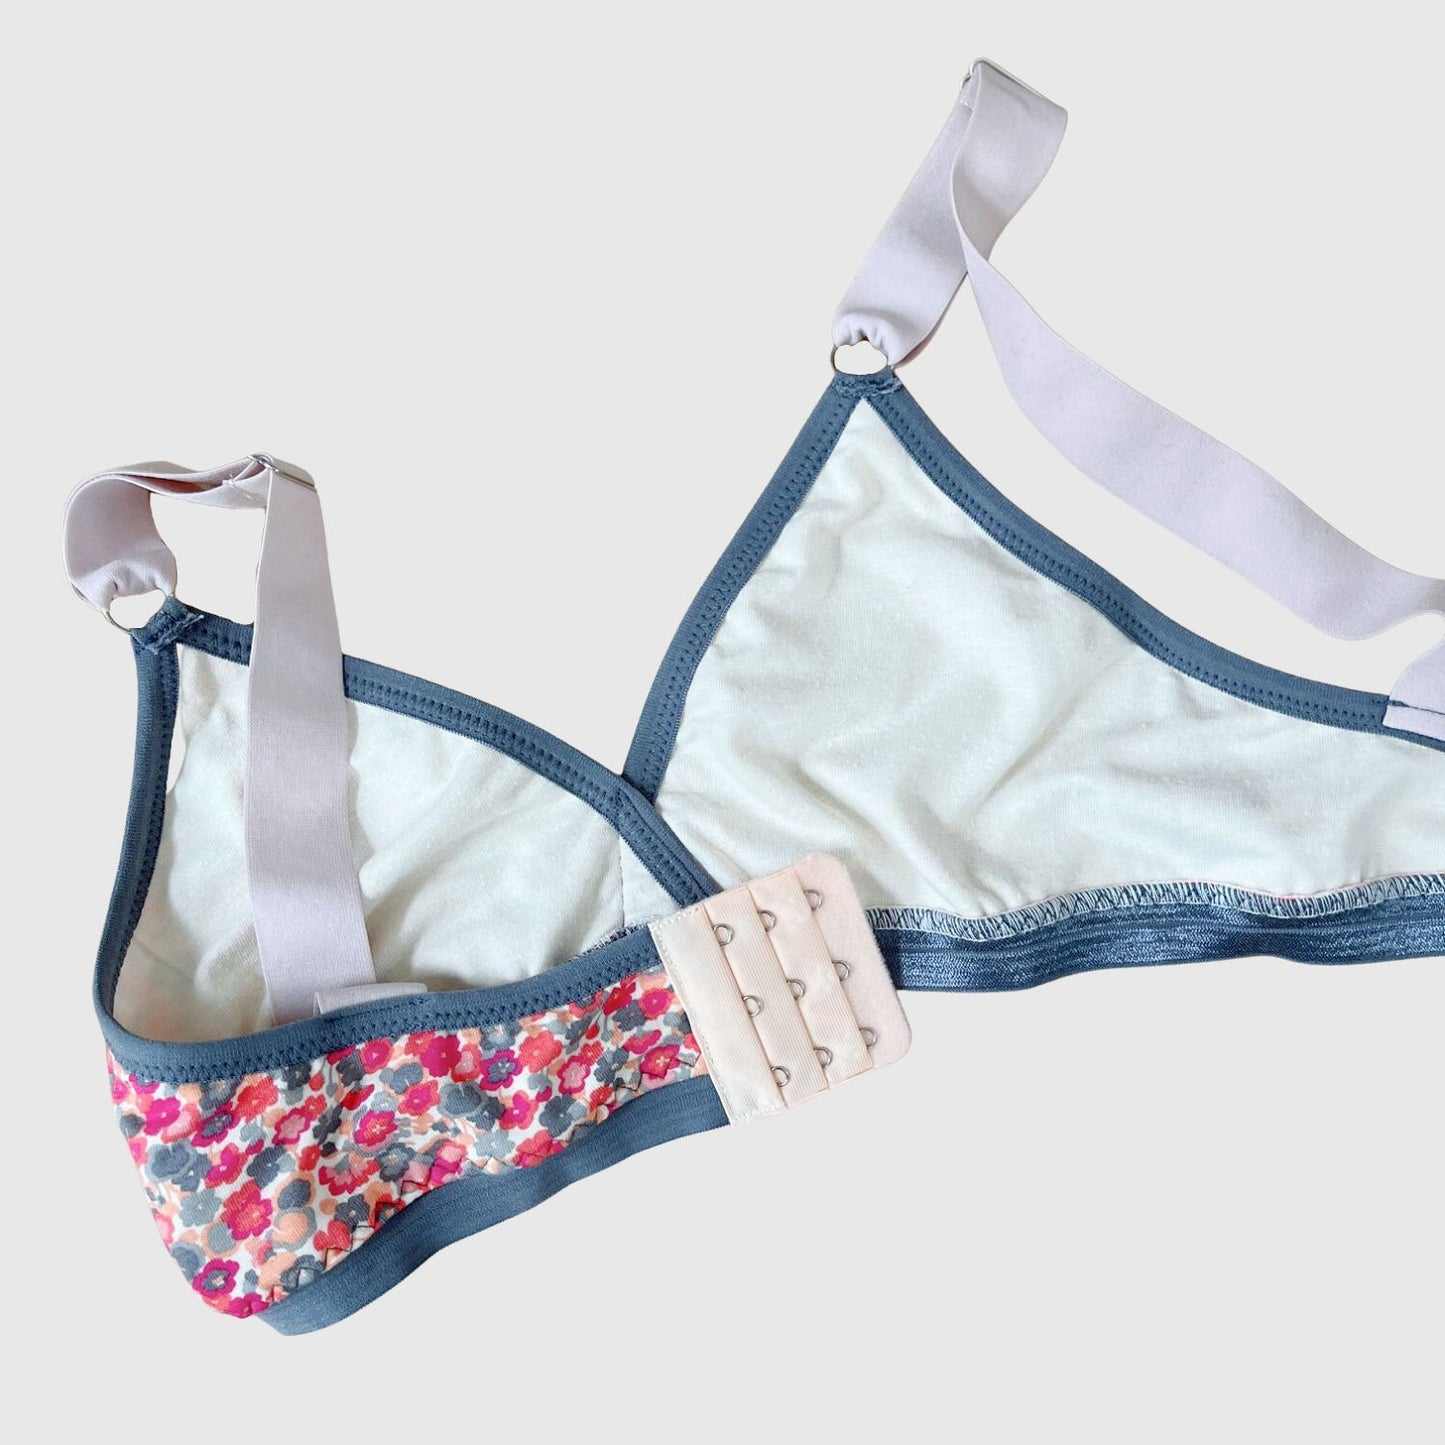 organic cotton bra | pink floral bra panties set | organic cotton underwear set | Made in Canada women's lingerie